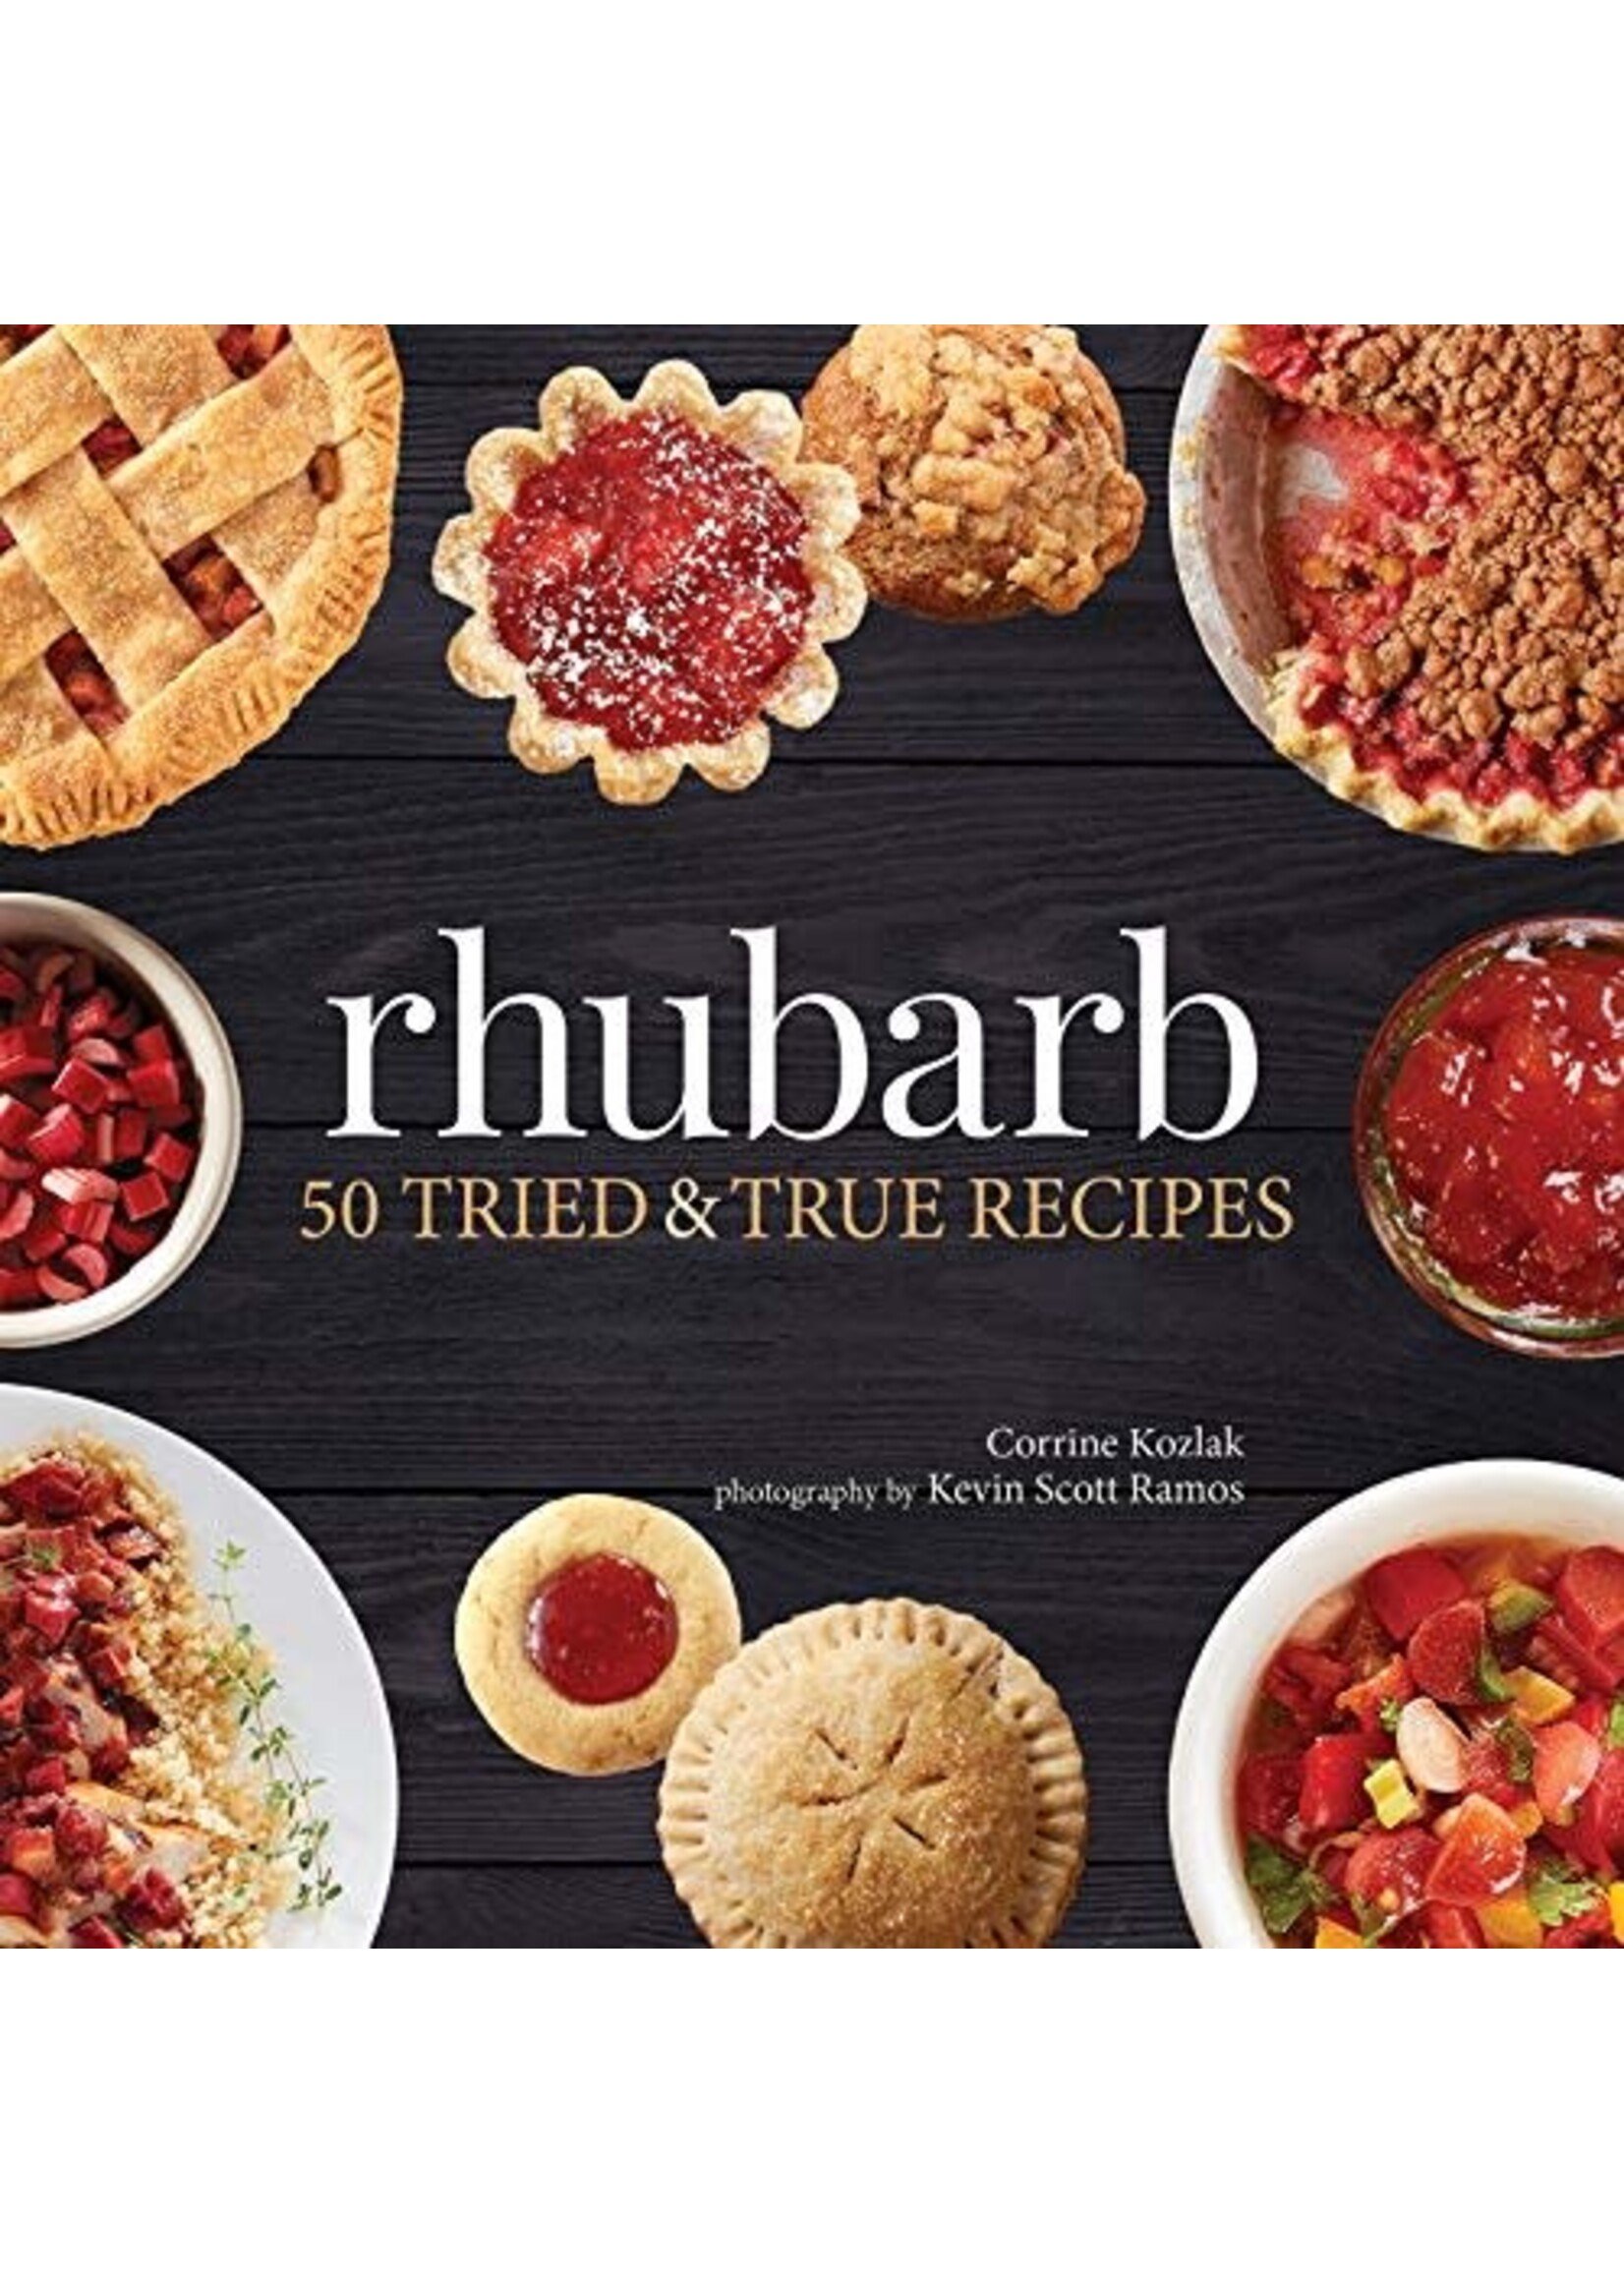 Rhubarb: 50 Tried & True Recipes